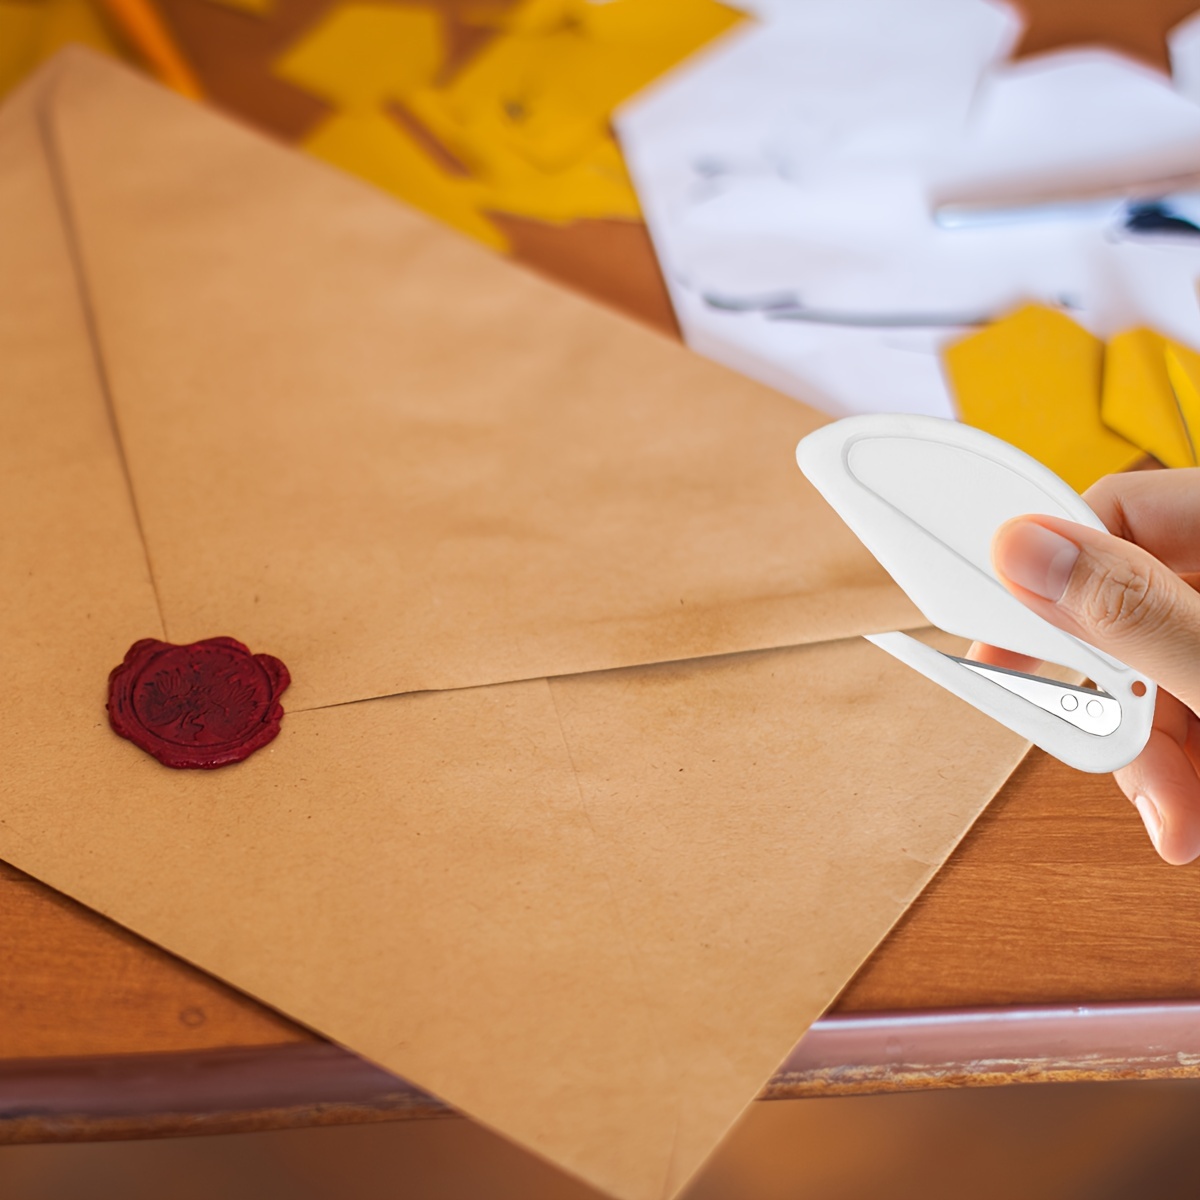 2pcs Letter Opener Envelope Slitter,Mail Opener Desks Letter Openers for  Envelope, Package,Open Envelopes with Ease,Safety Papers Cutter(red) 